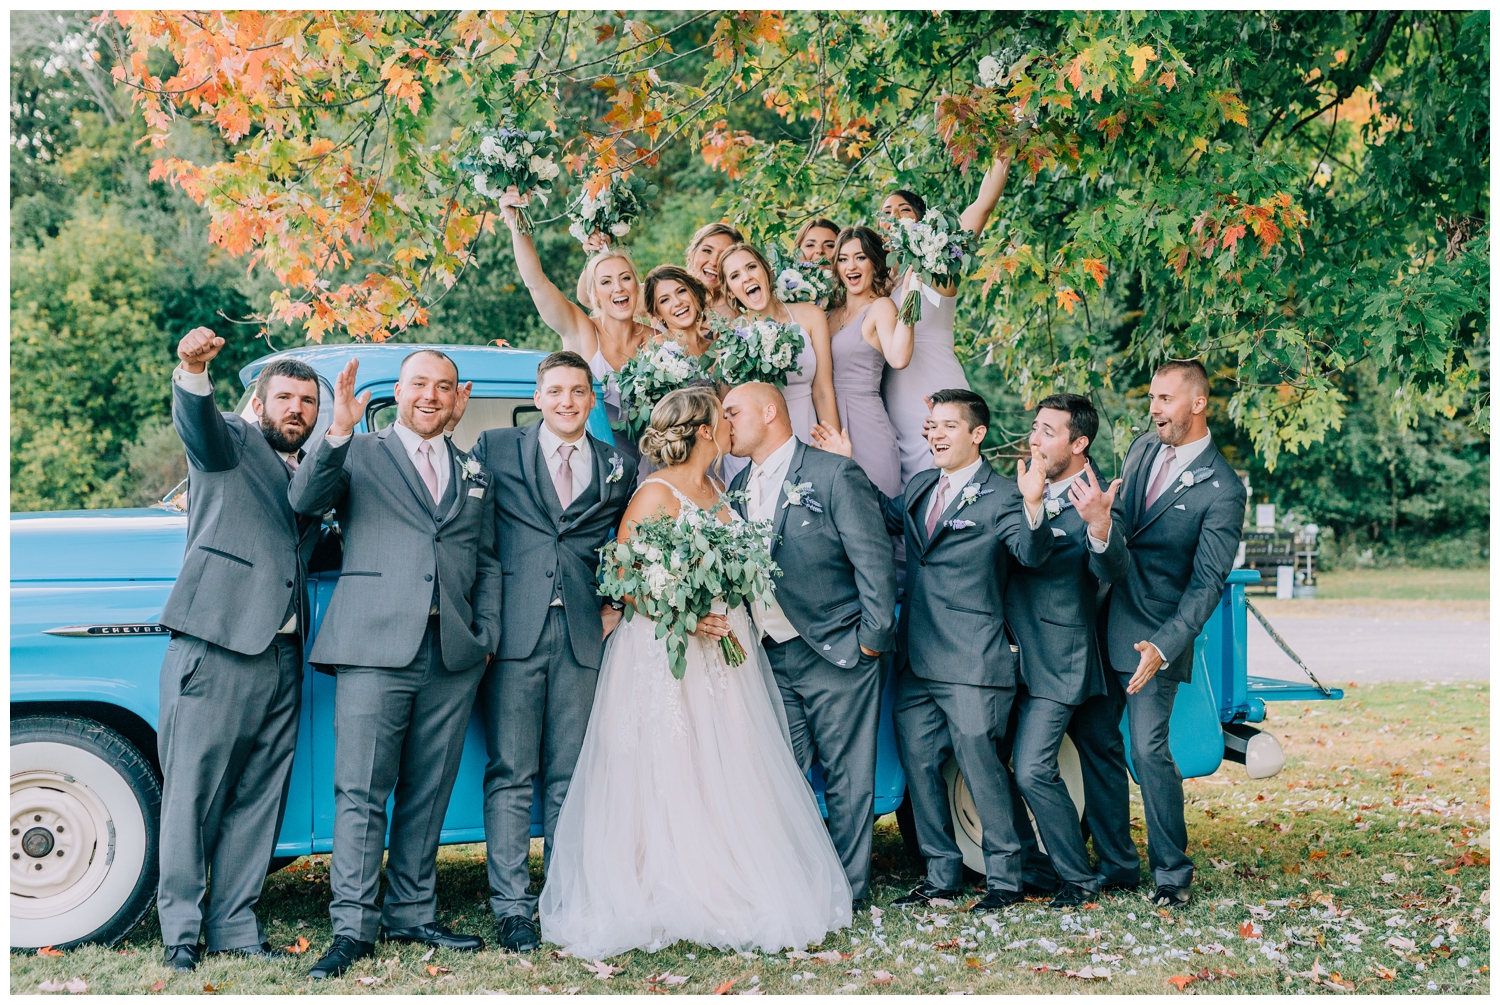 Buffalo Photographer,COVID Bride,ChautauqaWeddings,Chautauqua Harbor Hotel,Coronavirus Wedding,Fall Weddings,Hannah Bryerton,WNY Photographer,Western New York Wedding,